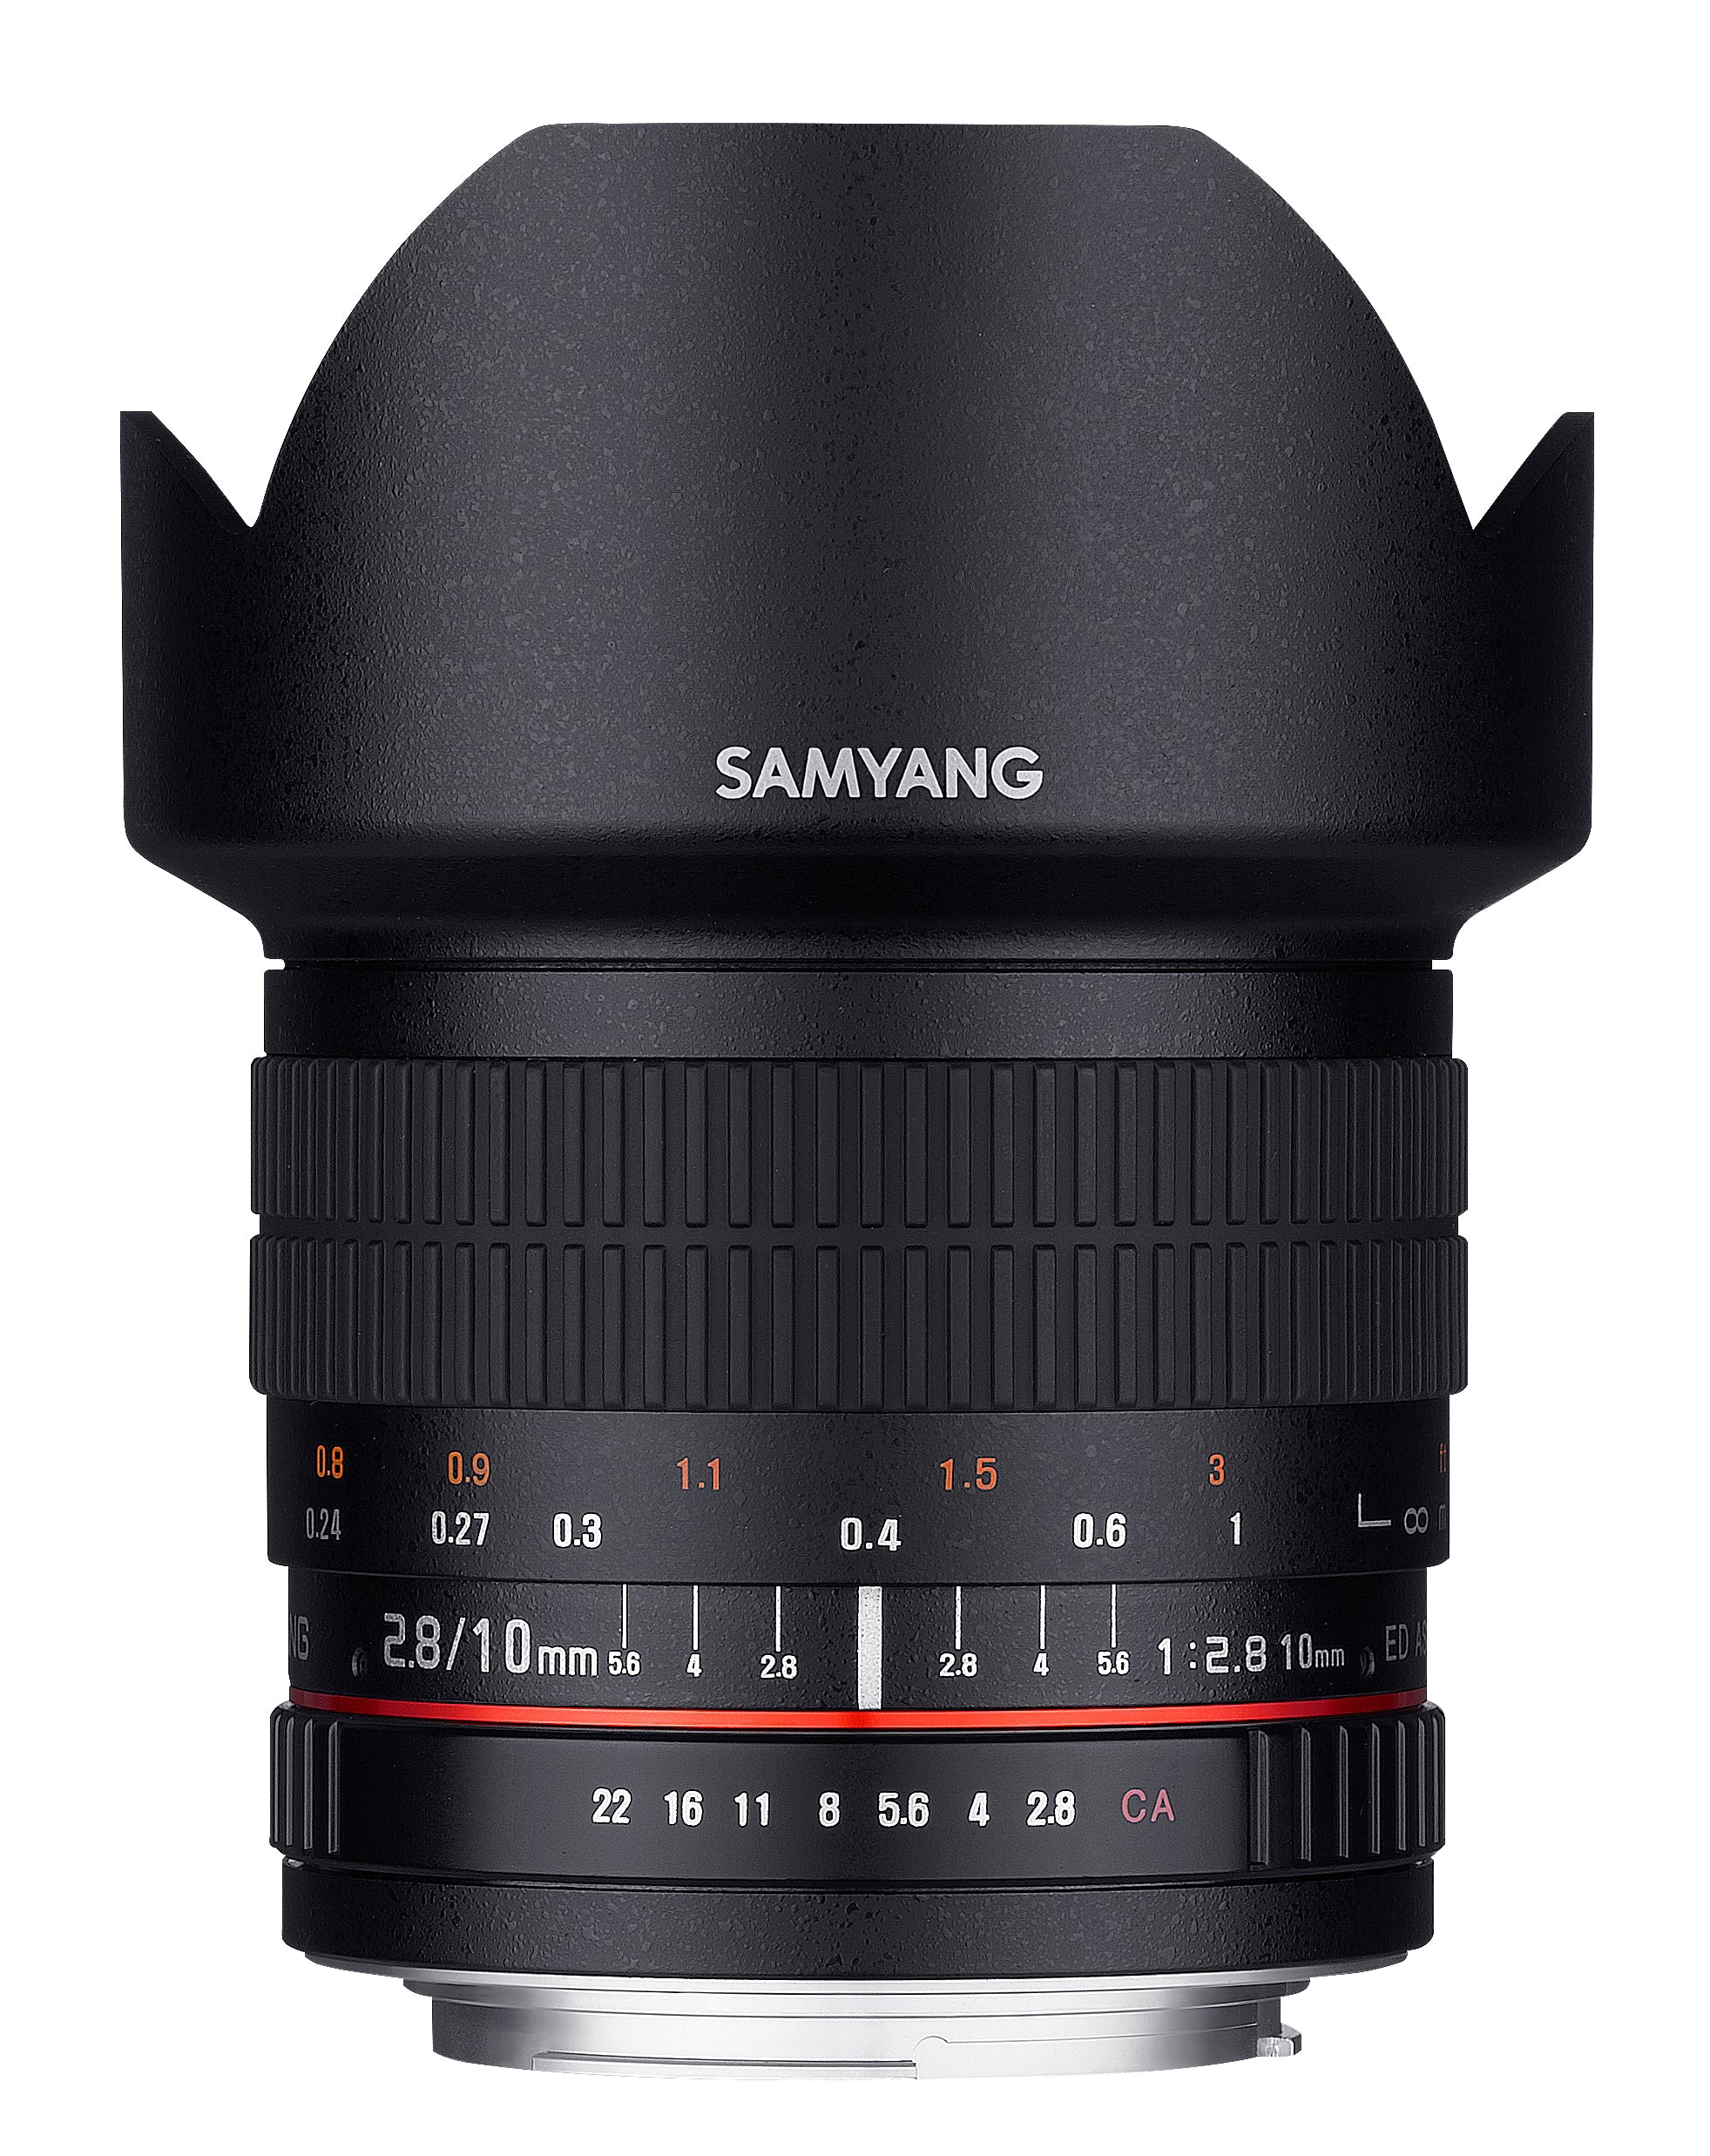 Samyang Pentax K | Samyang Lenses for Pentax | Samyang US